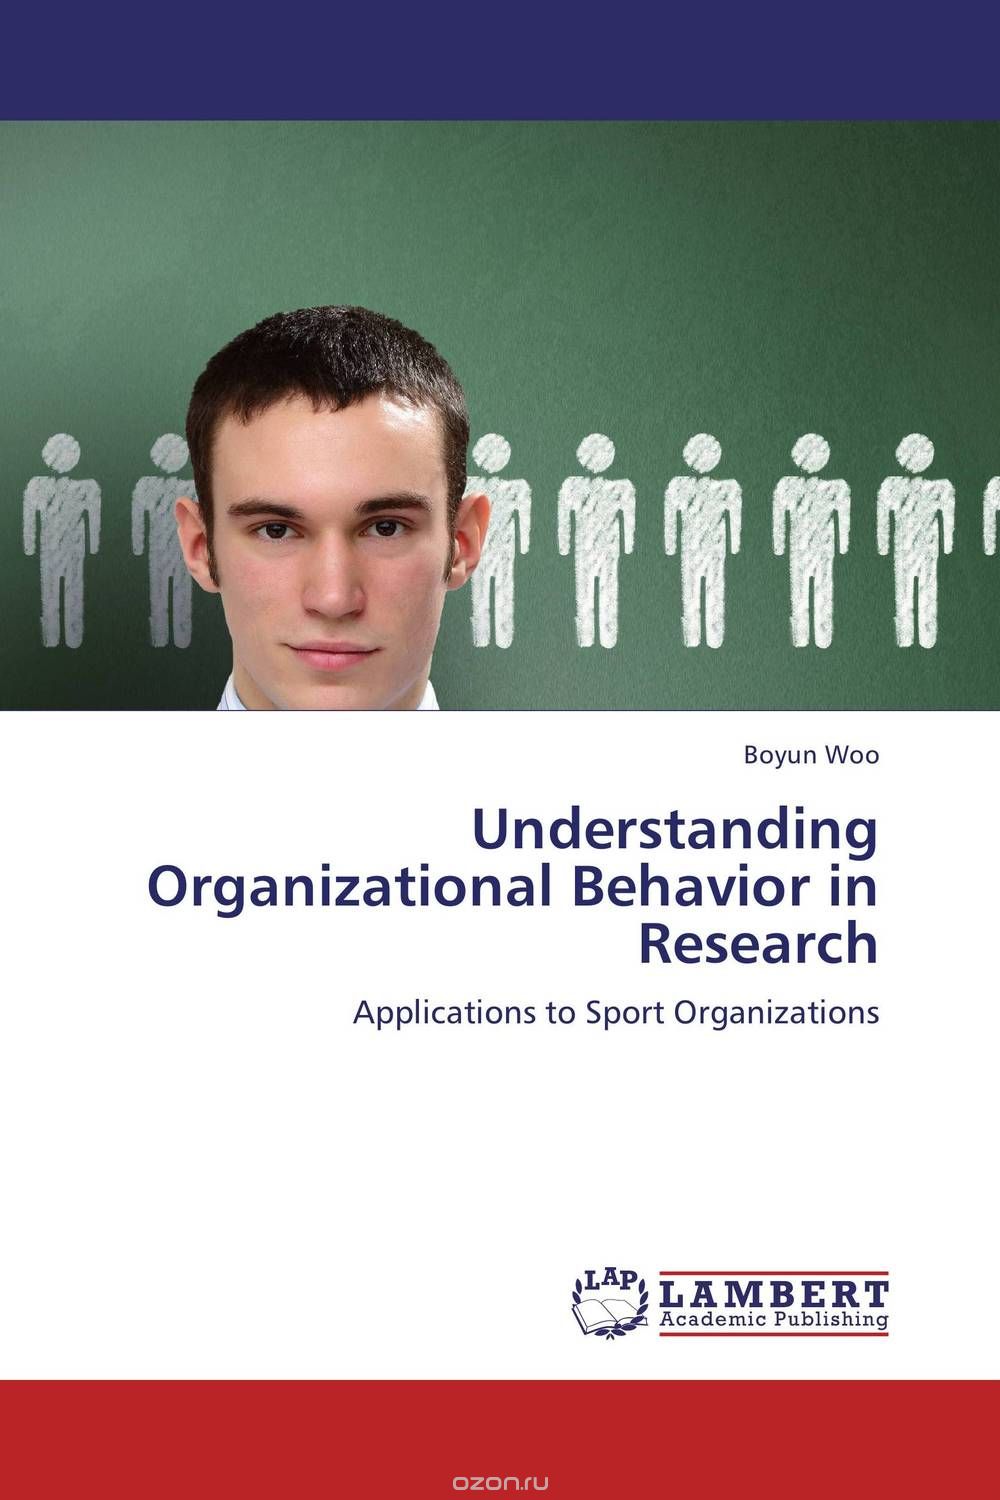 Скачать книгу "Understanding Organizational Behavior in Research"